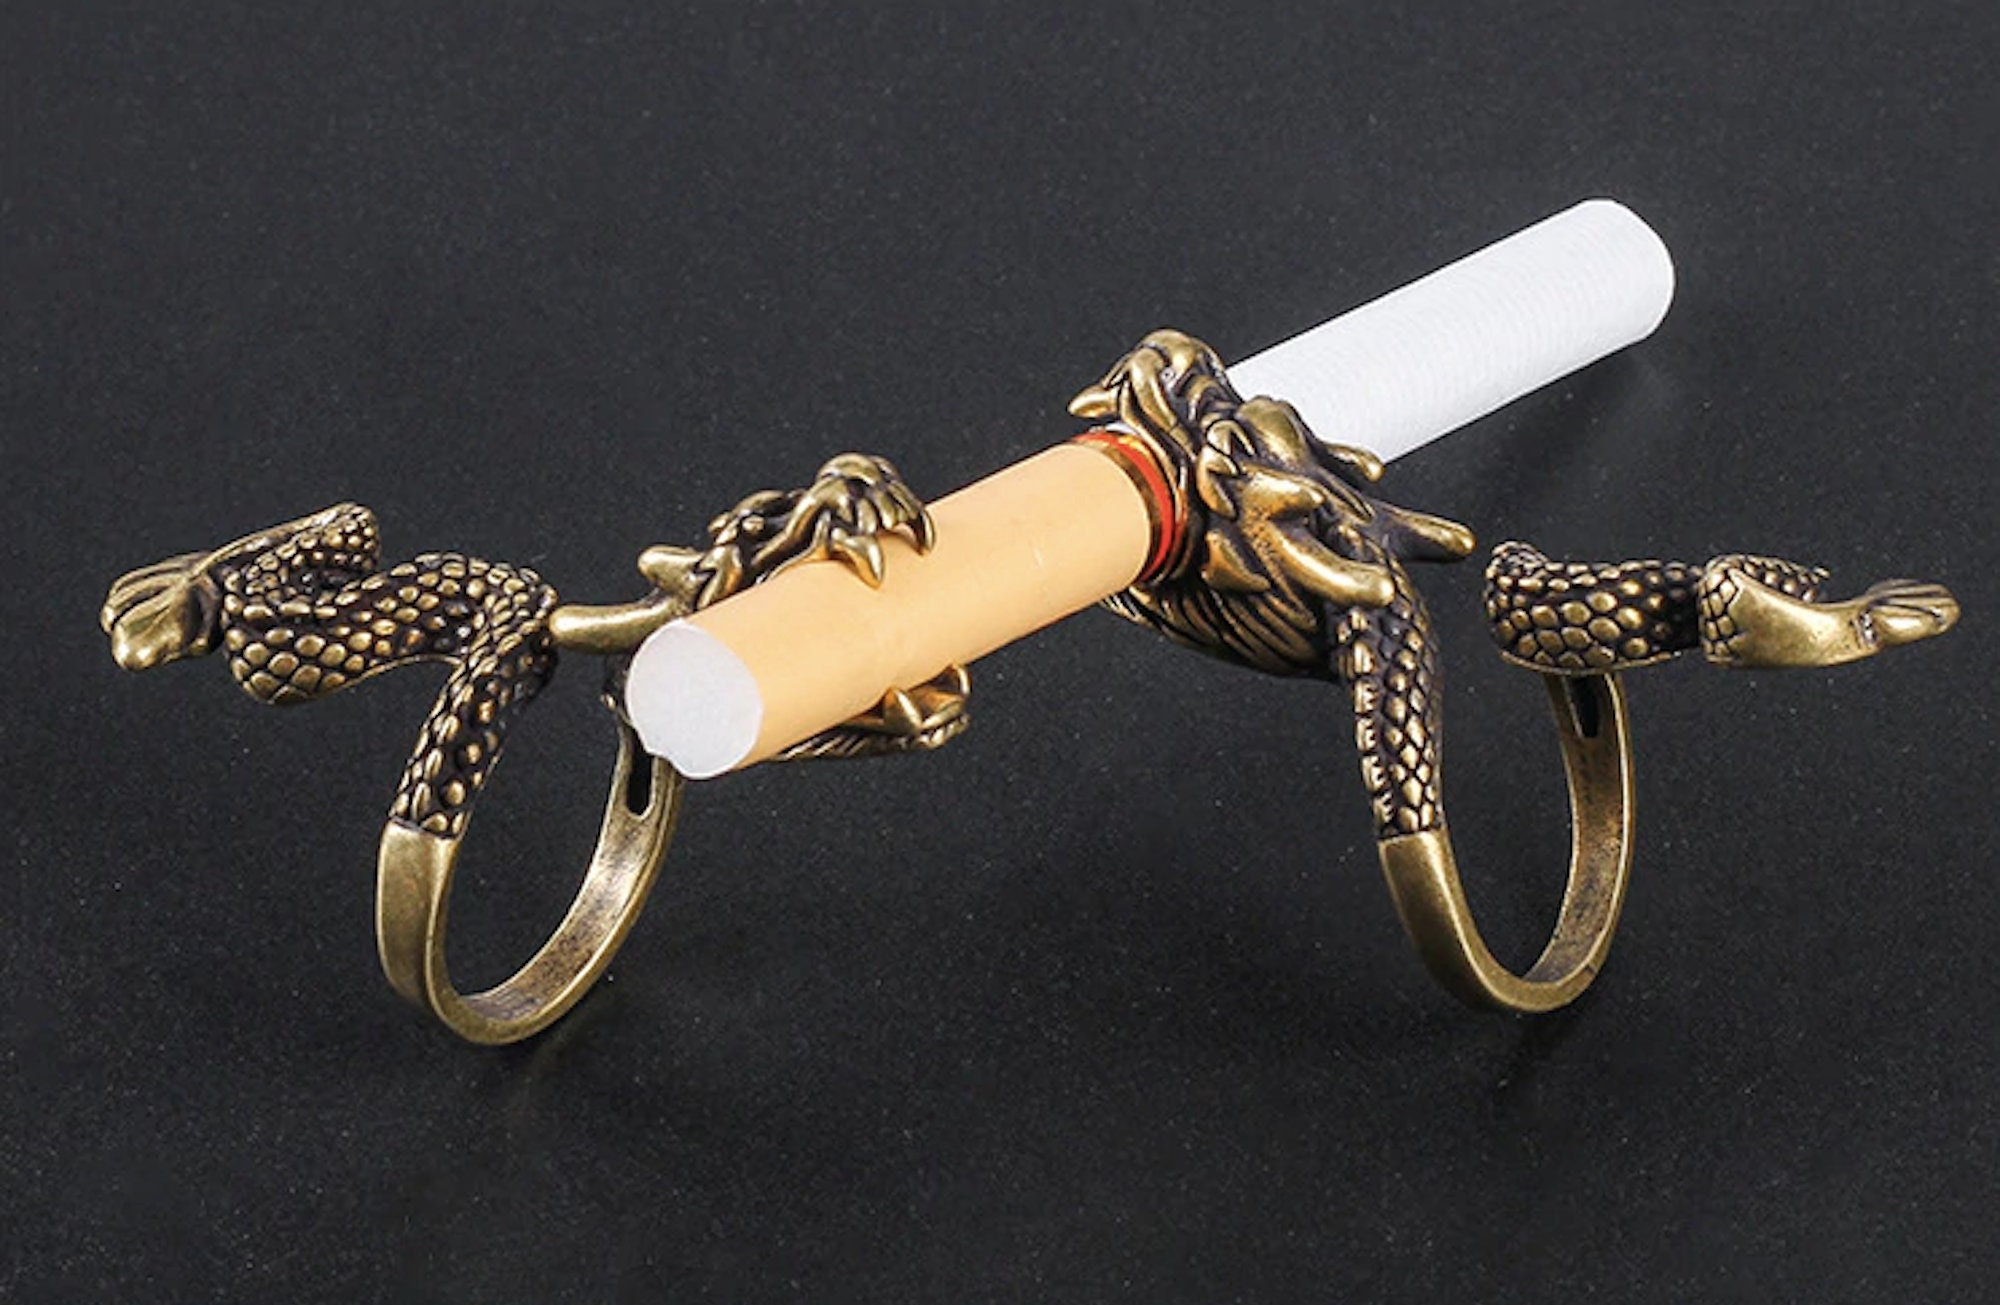 1pc Creative Dragon Design Alloy Cigarette Holder Ring For Men's Daily Use